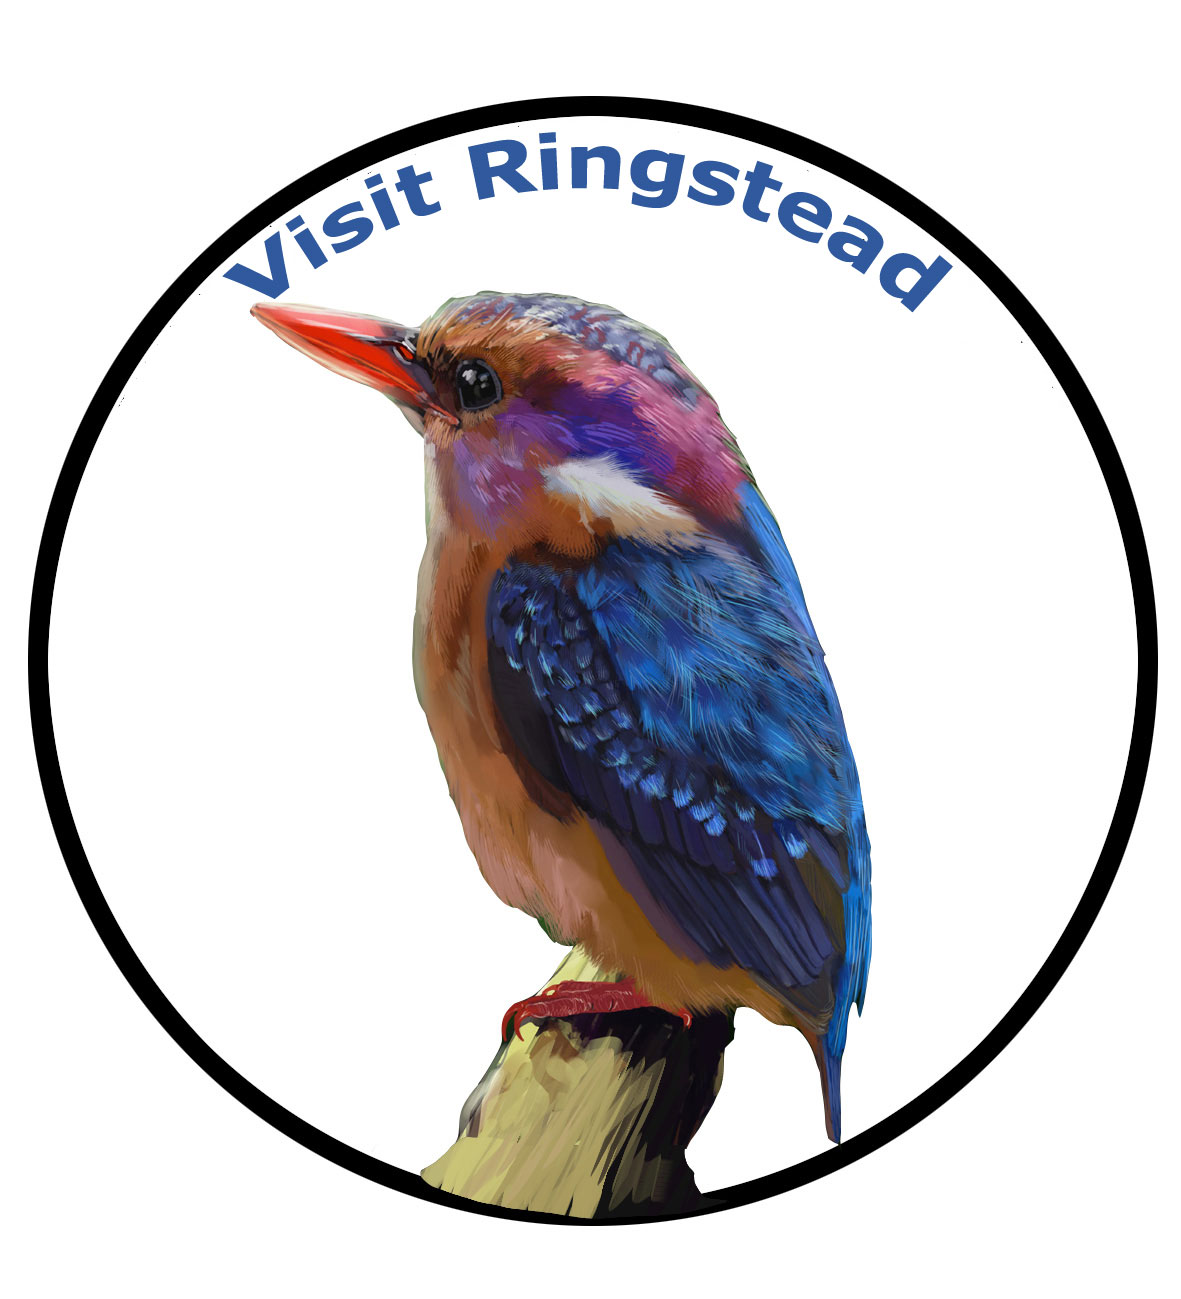 Visit Ringstead logo